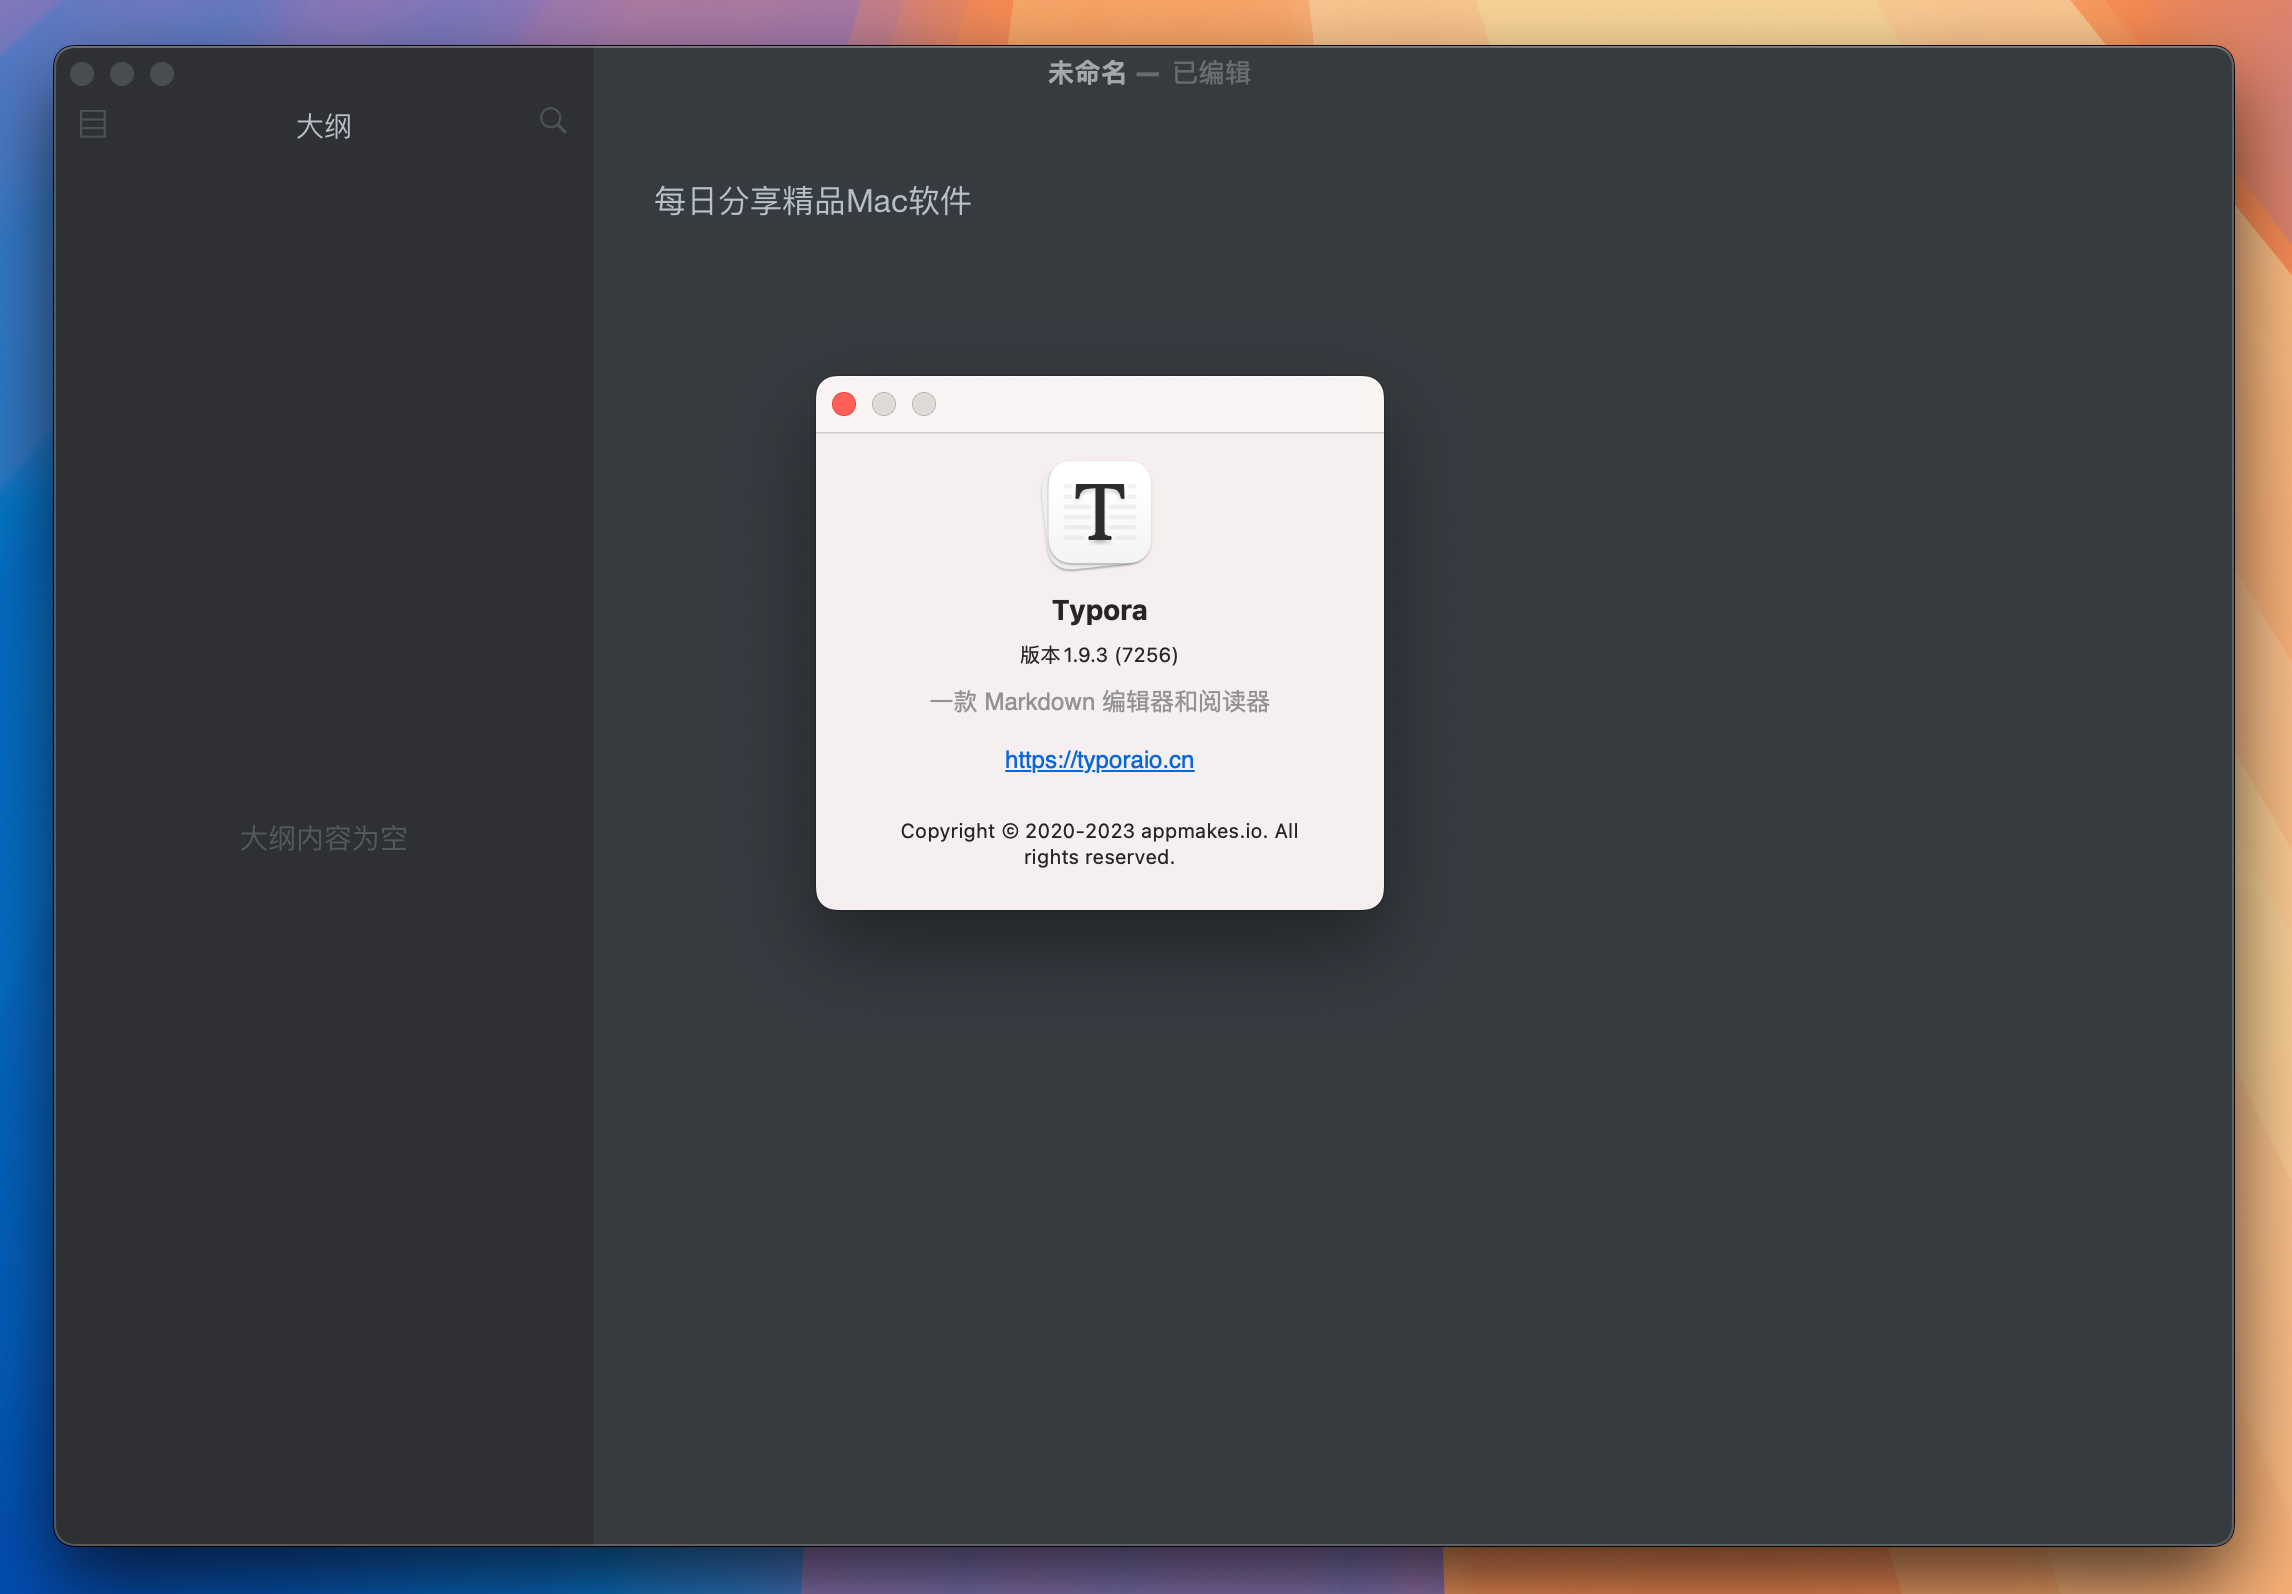 Typora for Mac v1.9.3 Markdown文本编辑器 免激活下载-1